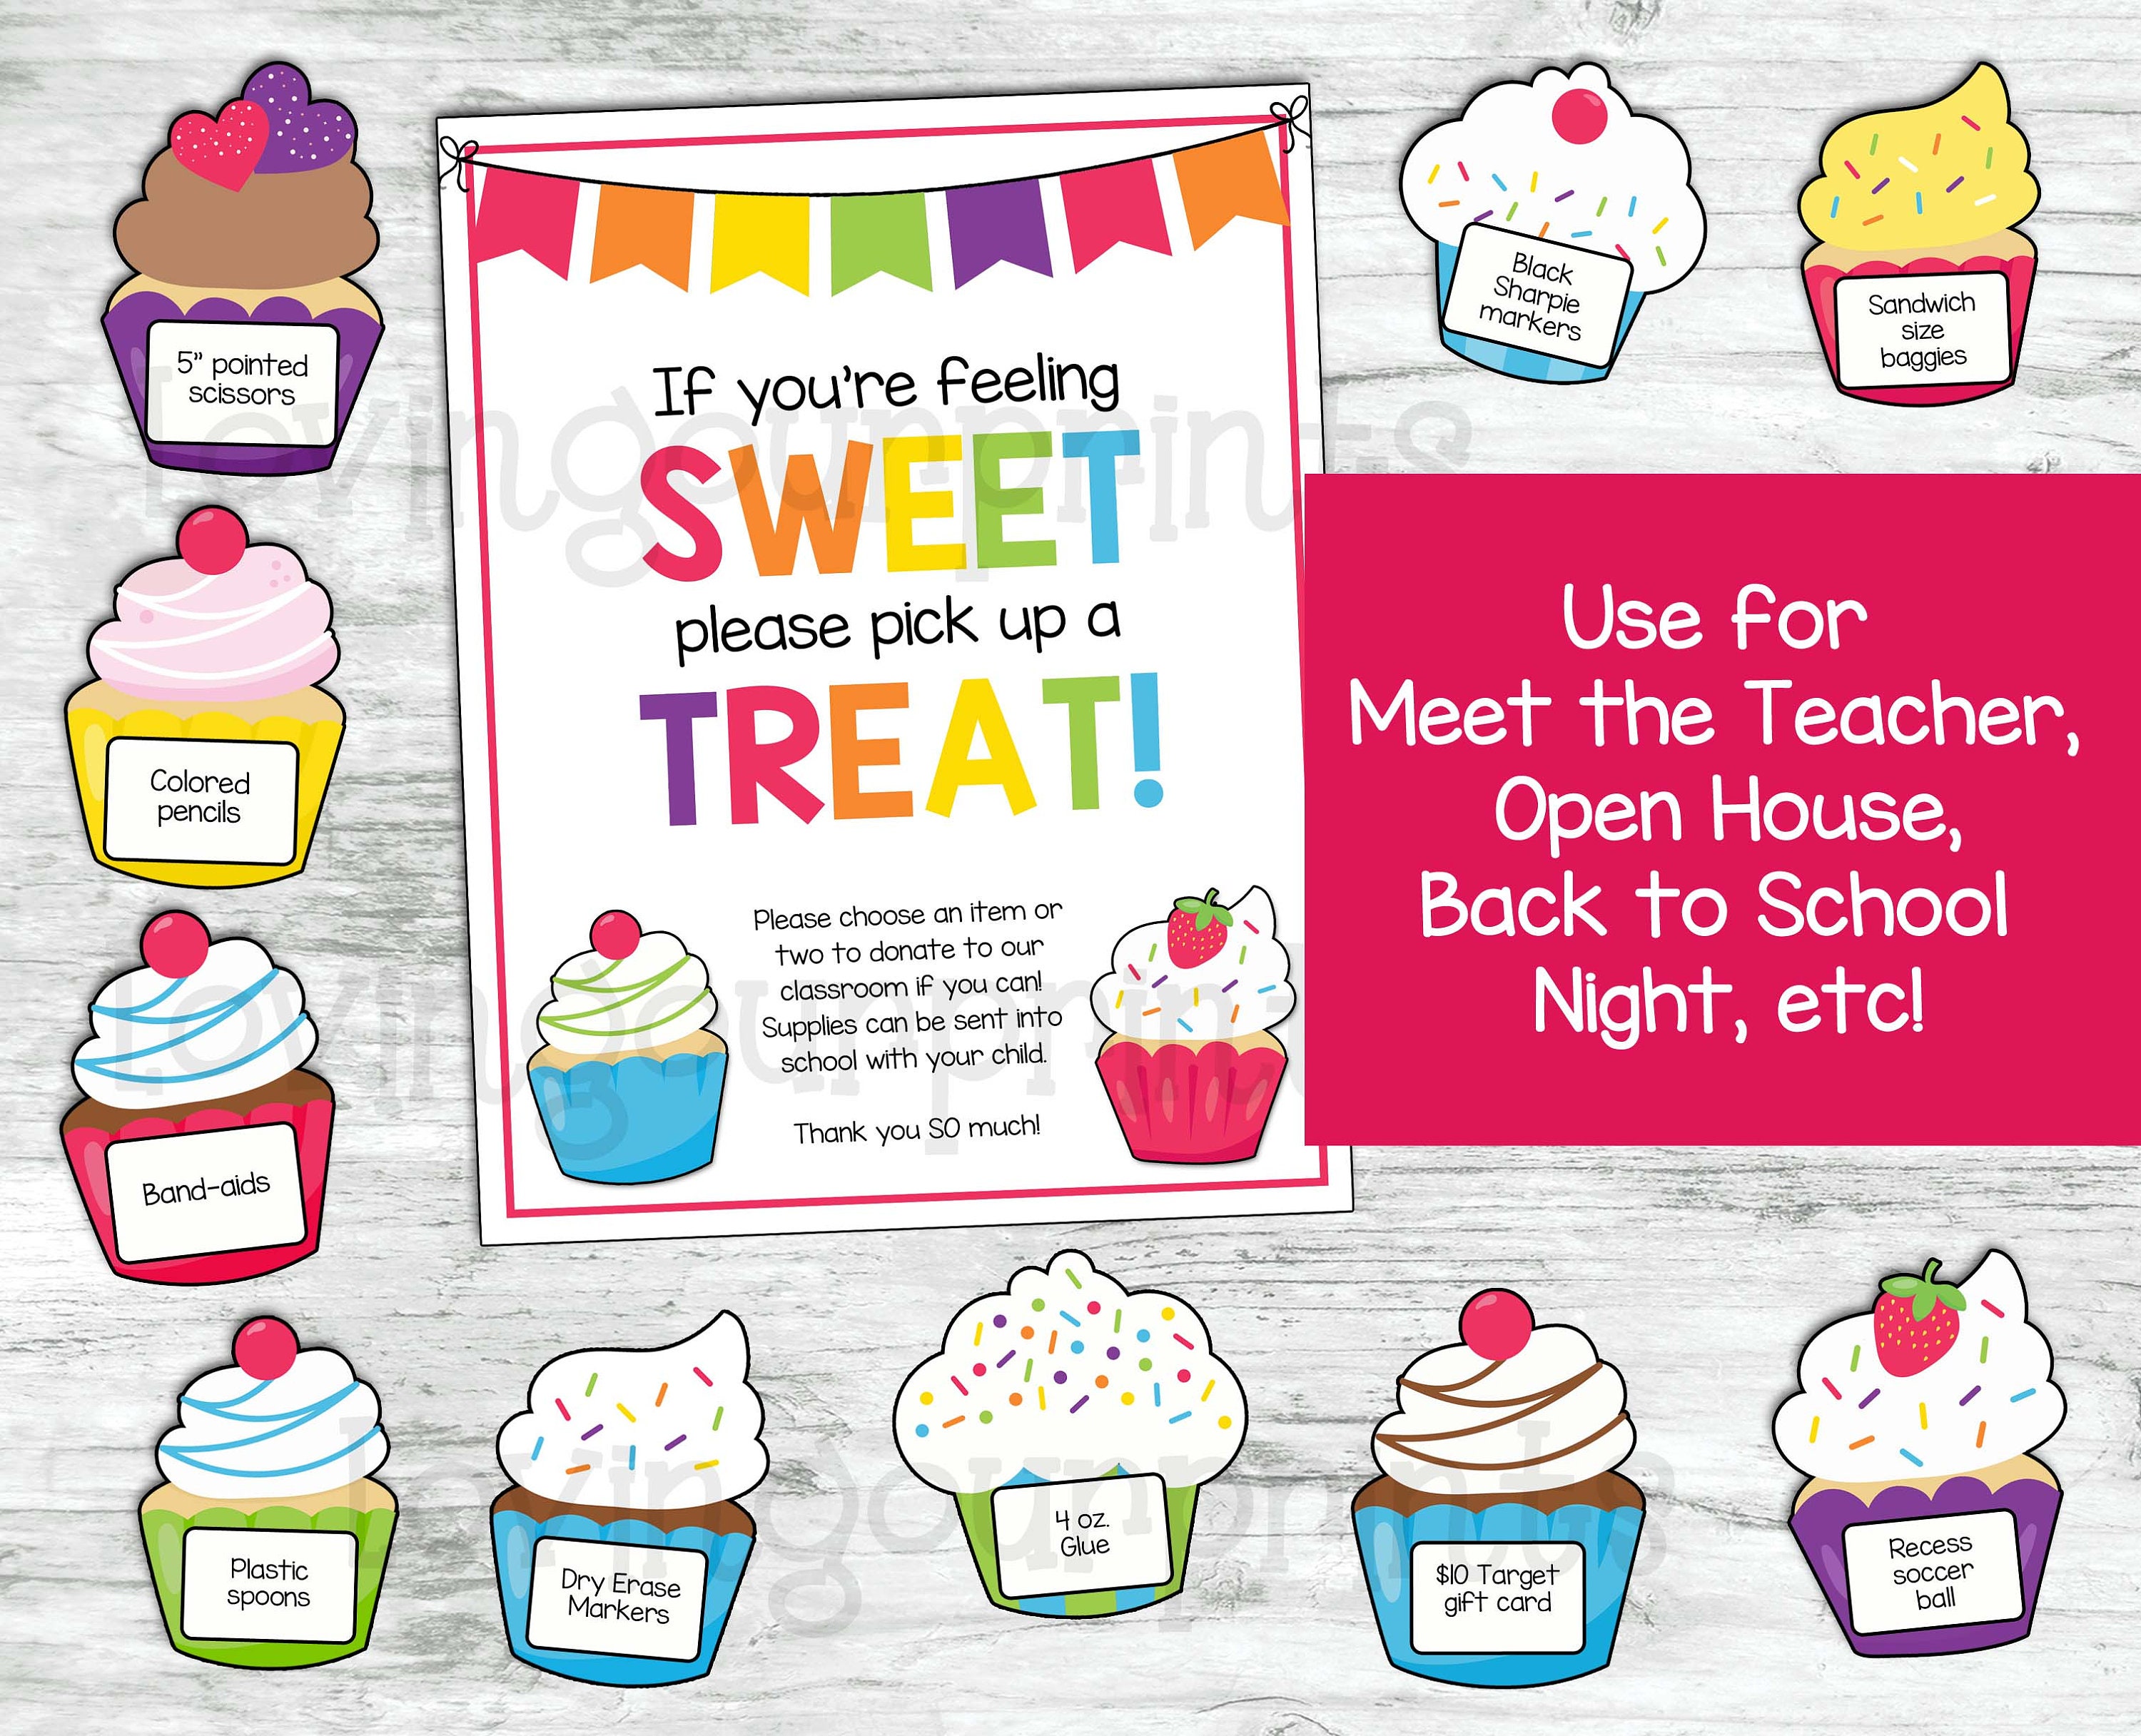 Sweet Treats! Donation Cards for Meet the Teacher/ Open House